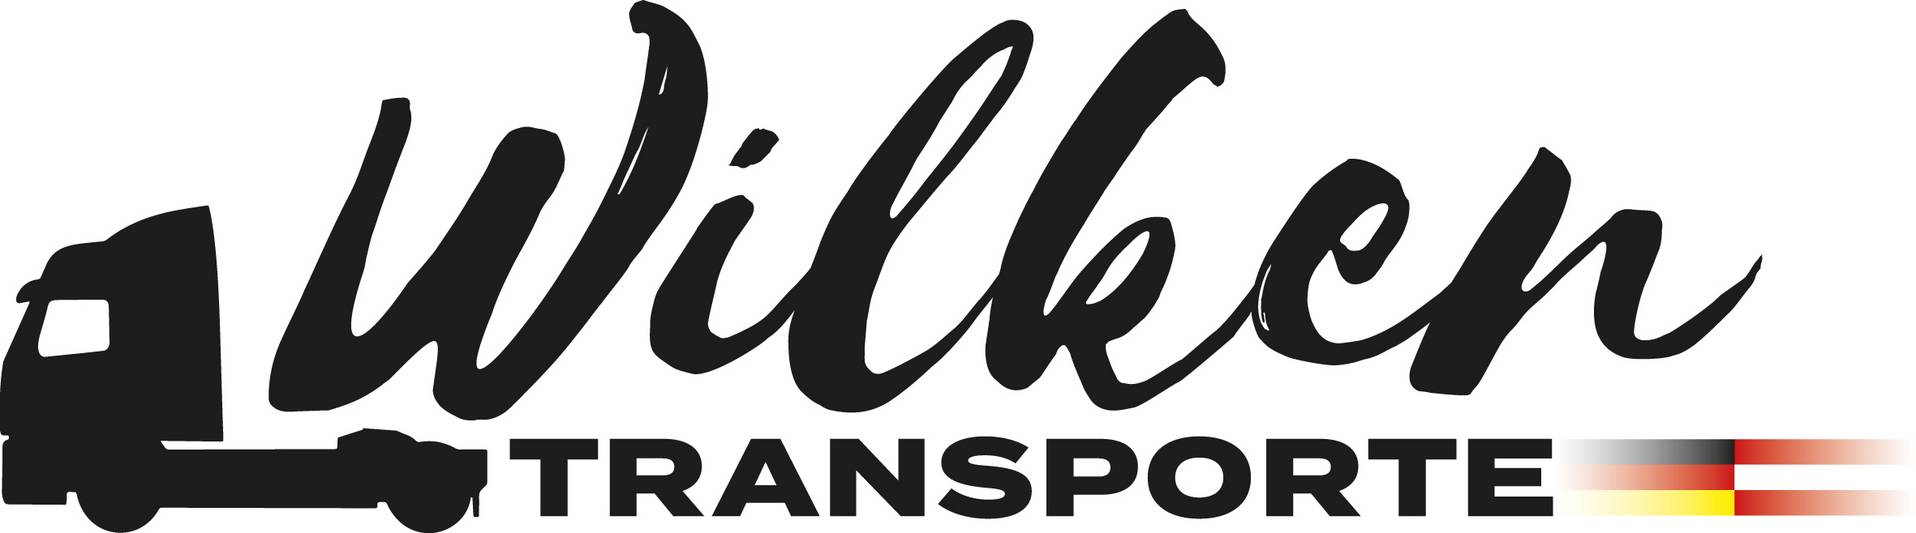 Wilken Transport GmbH